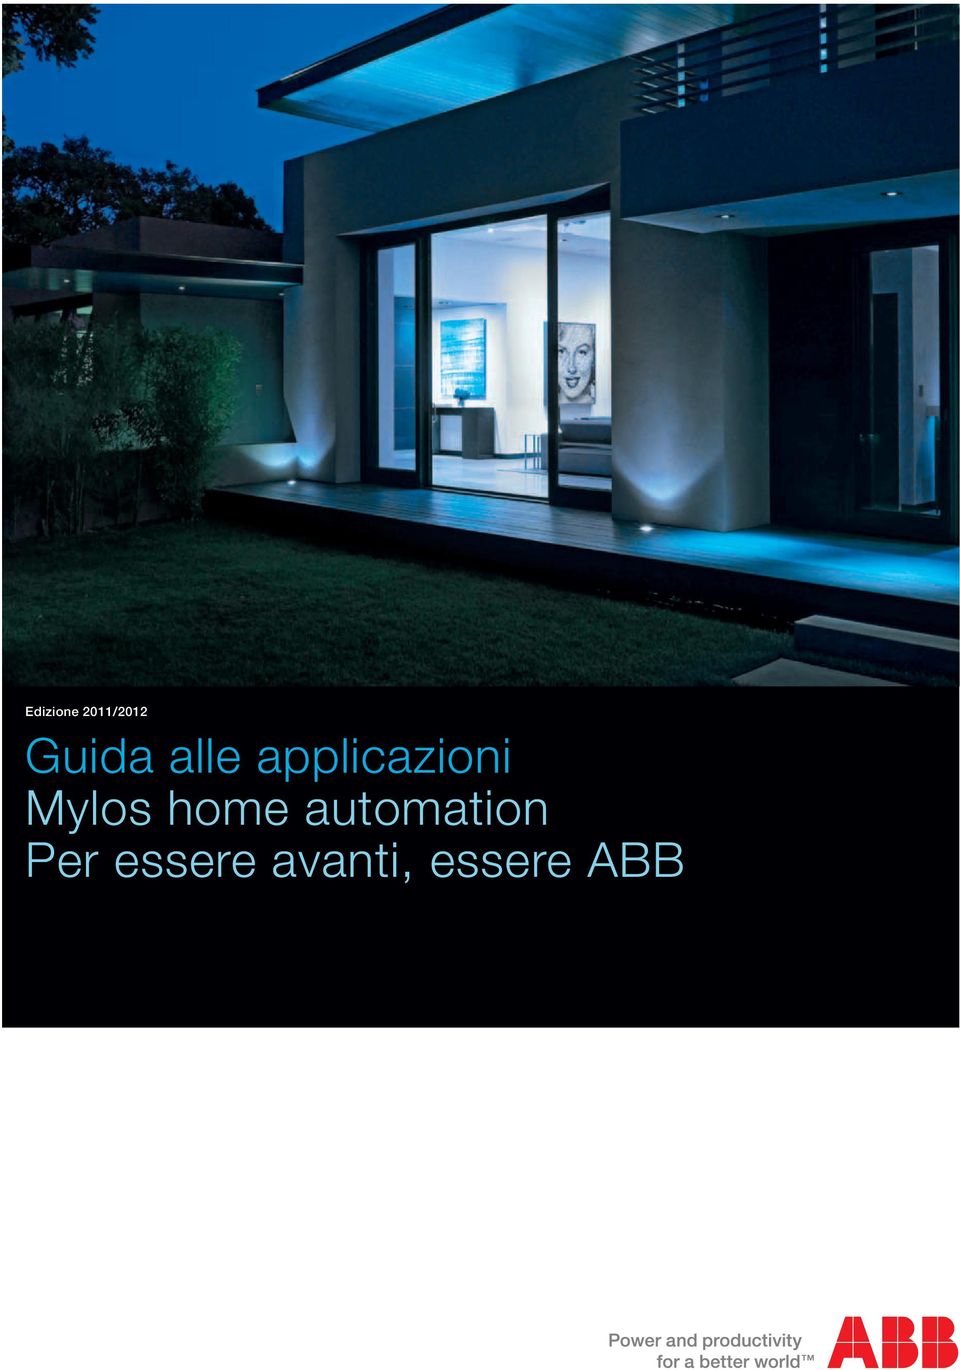 Mylos home automation